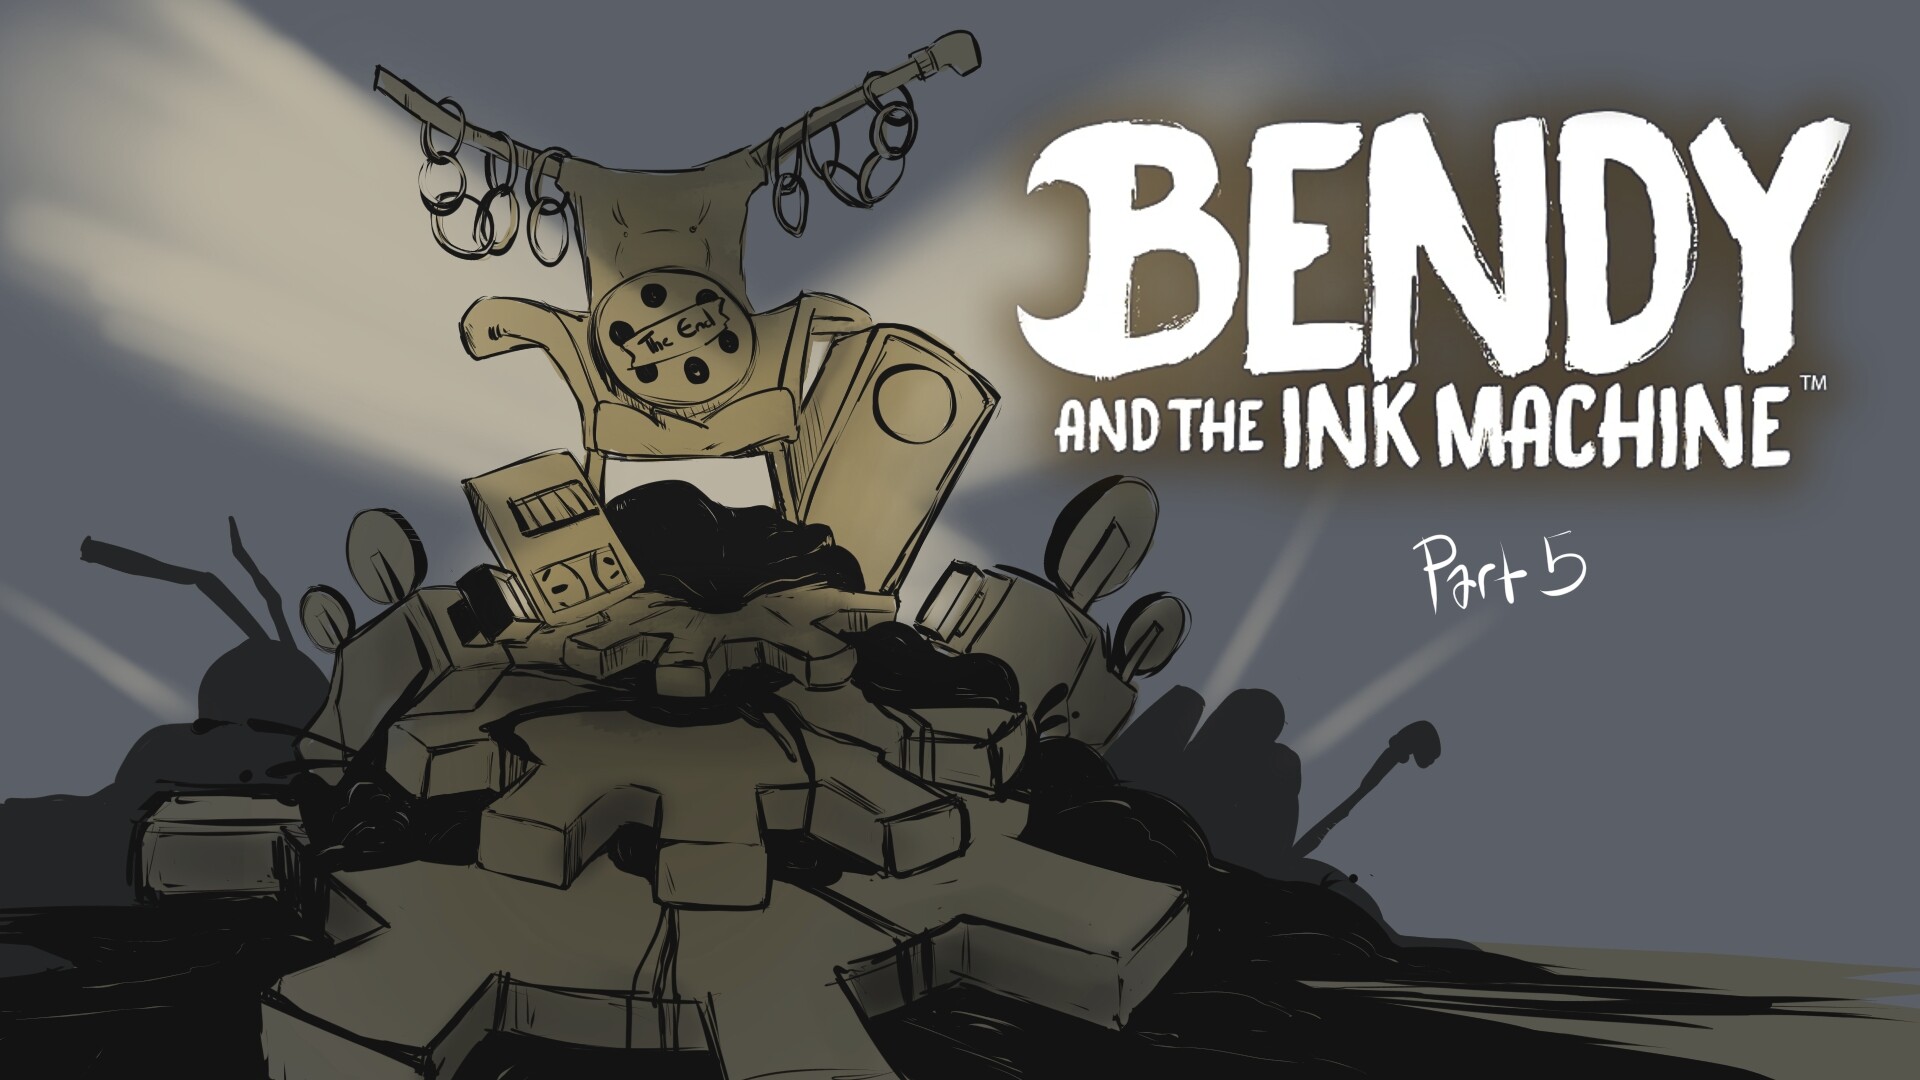 ArtStation - Bendy & the Ink Machine